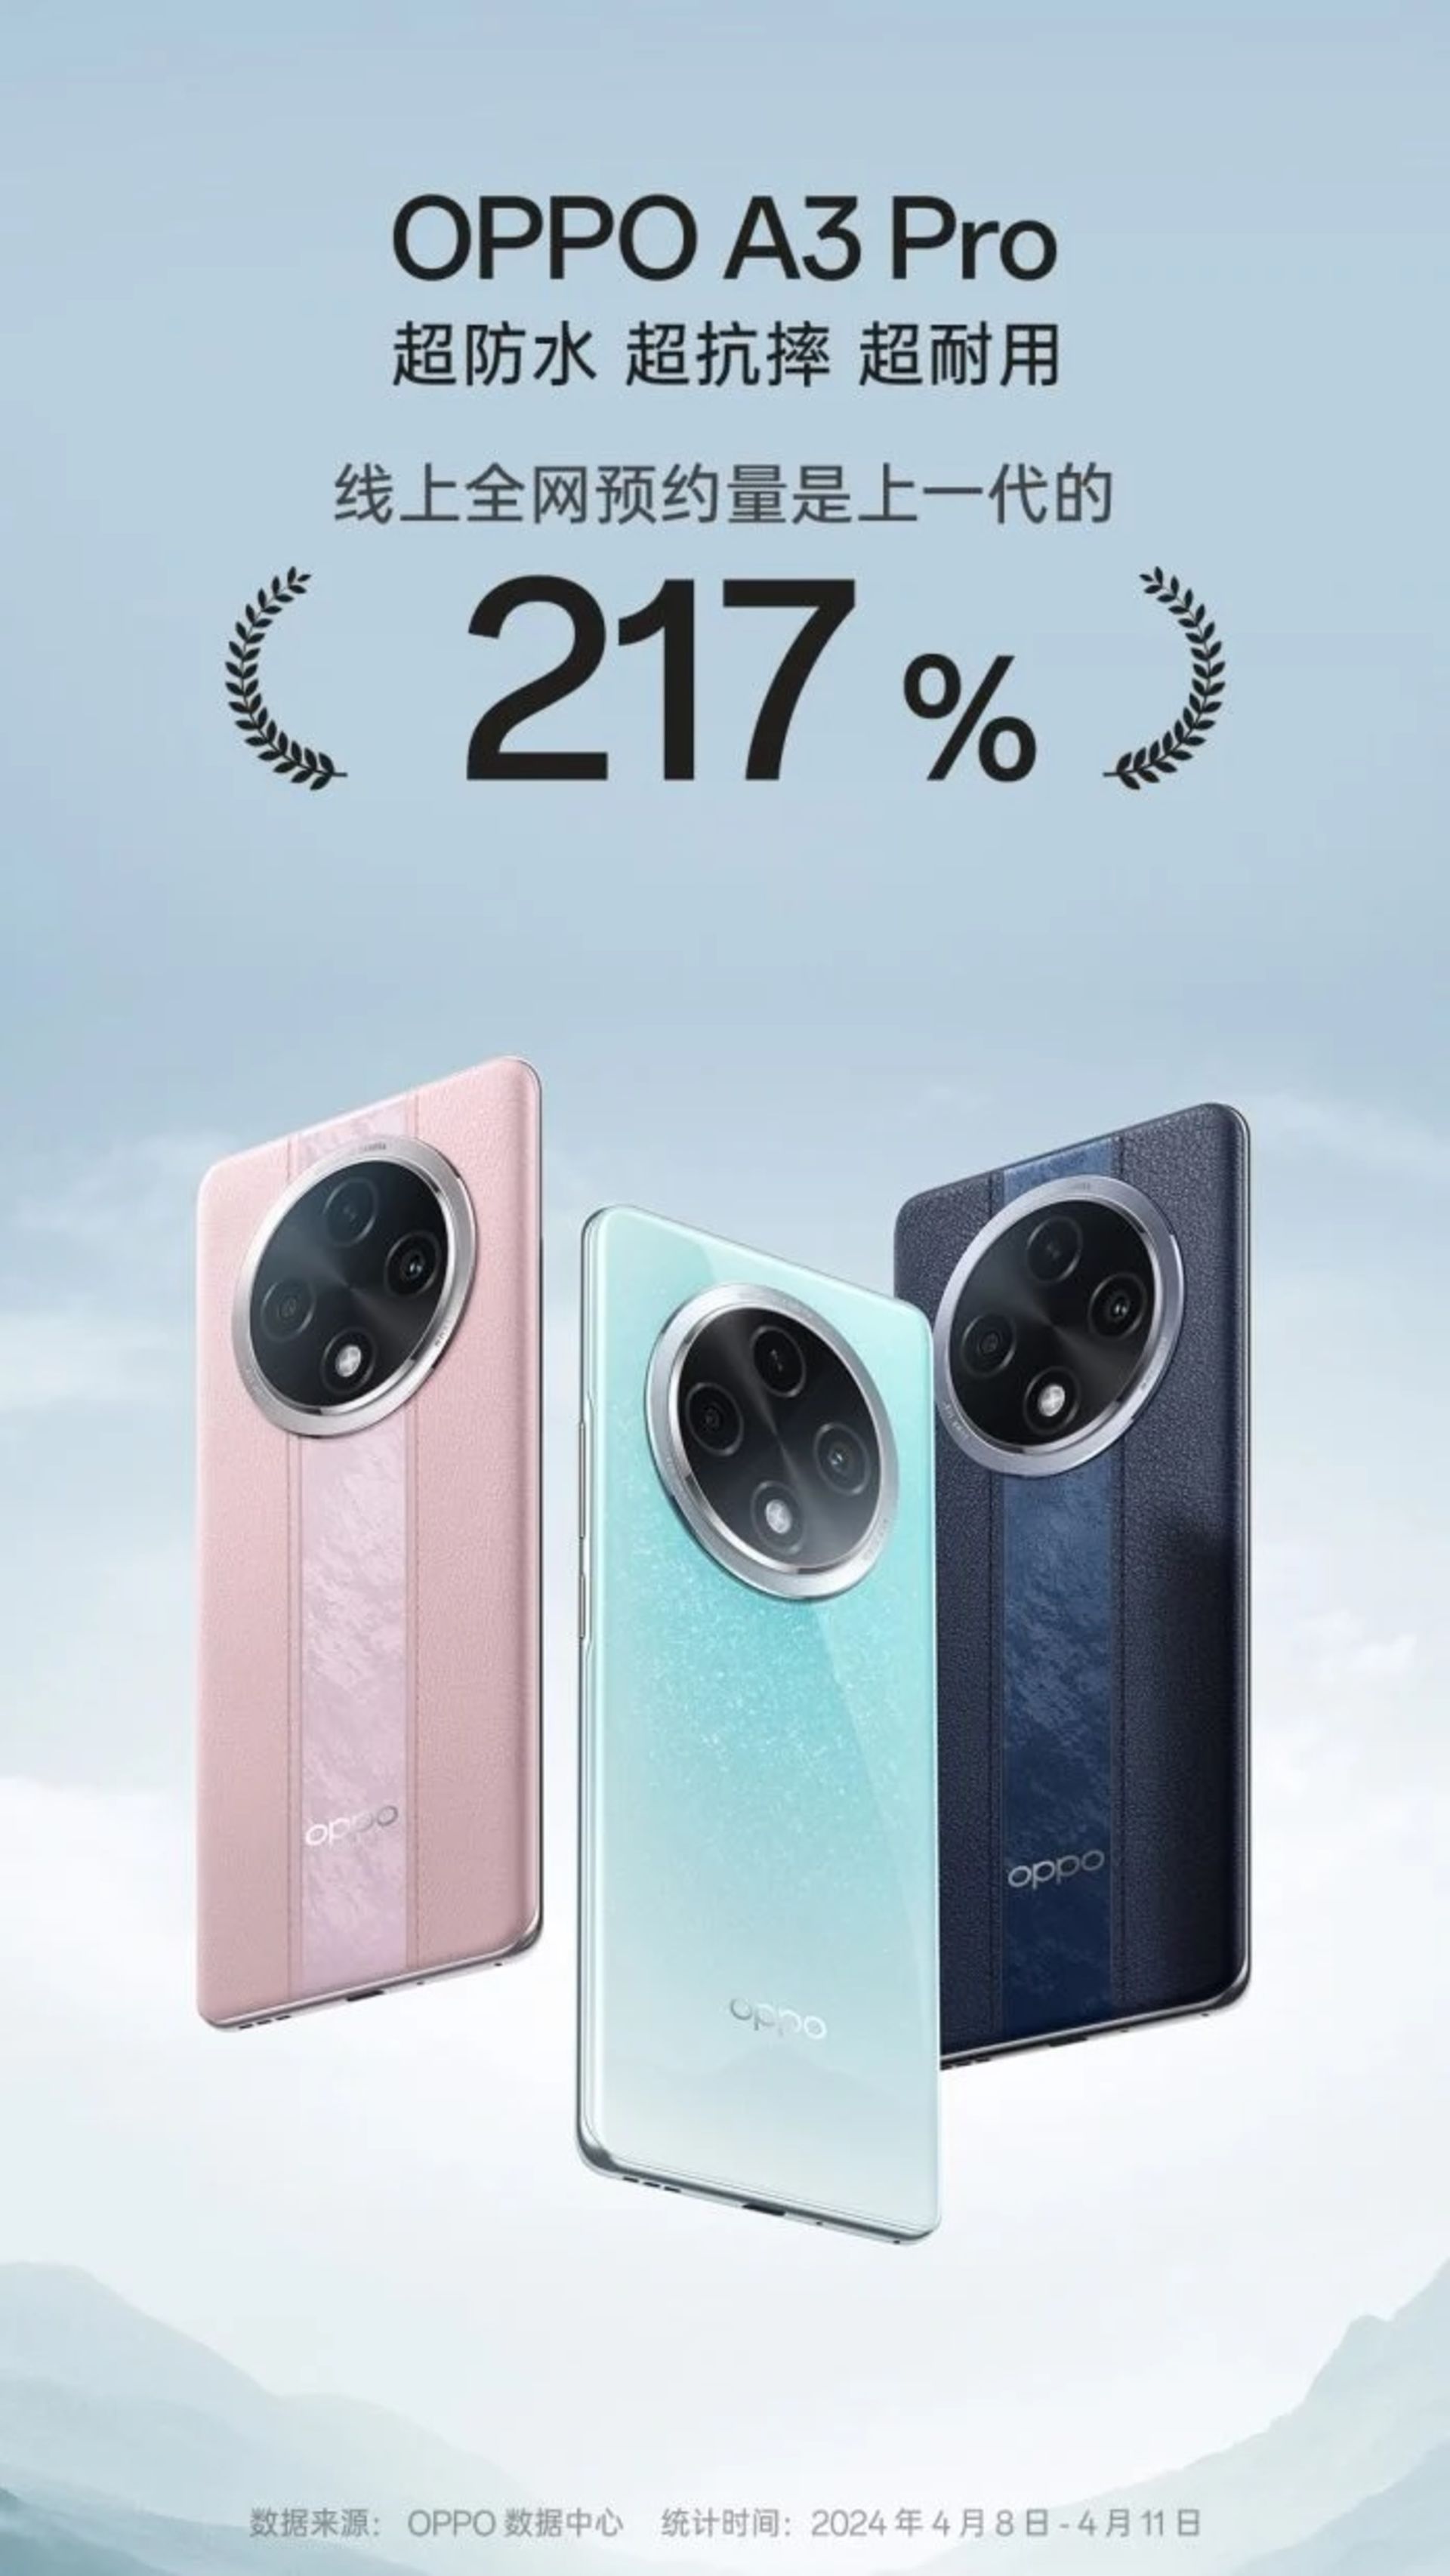 گوشی اوپو a3 پرو در سه رنگ صورتی، لاجوردی و آبی